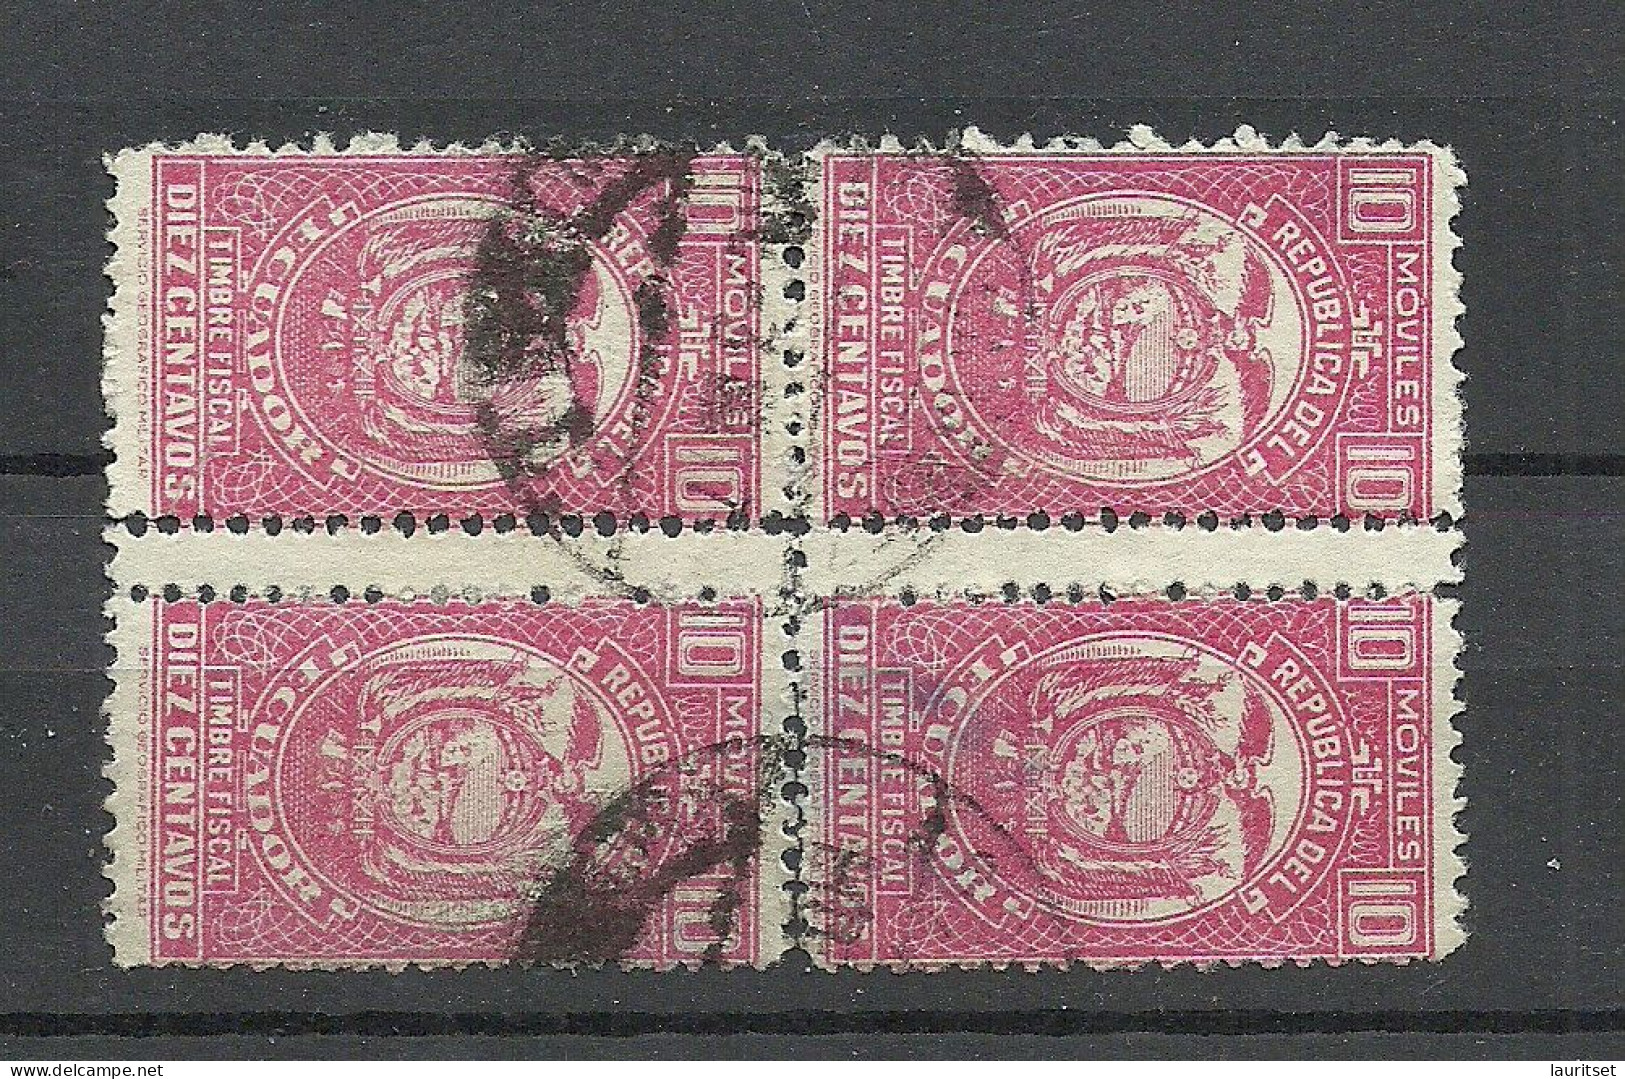 ECUADOR 1945 Timbre Fiscal Moviles As 4-block With Gutter O NB! Some Separation Between Stamps - Ecuador